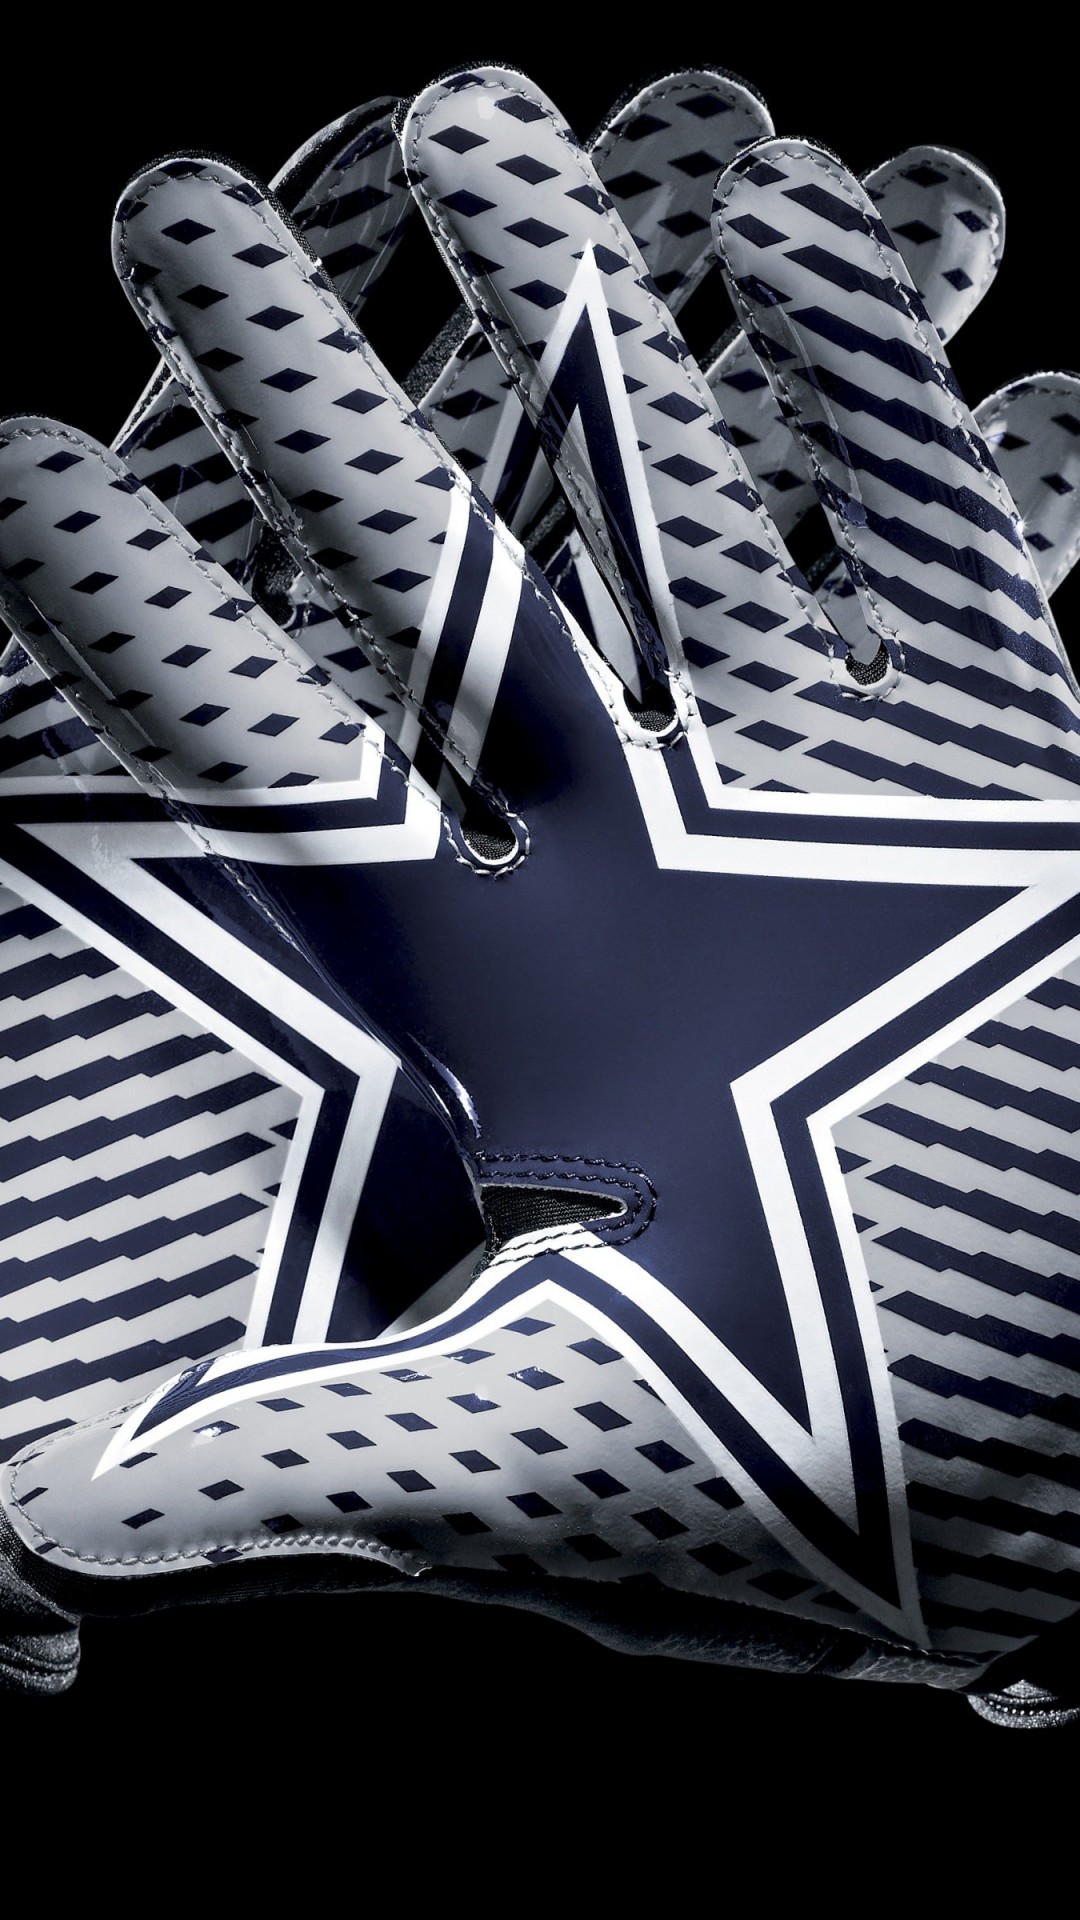 Dallas Cowboys Gloves Wallpaper for Google Nexus 5X